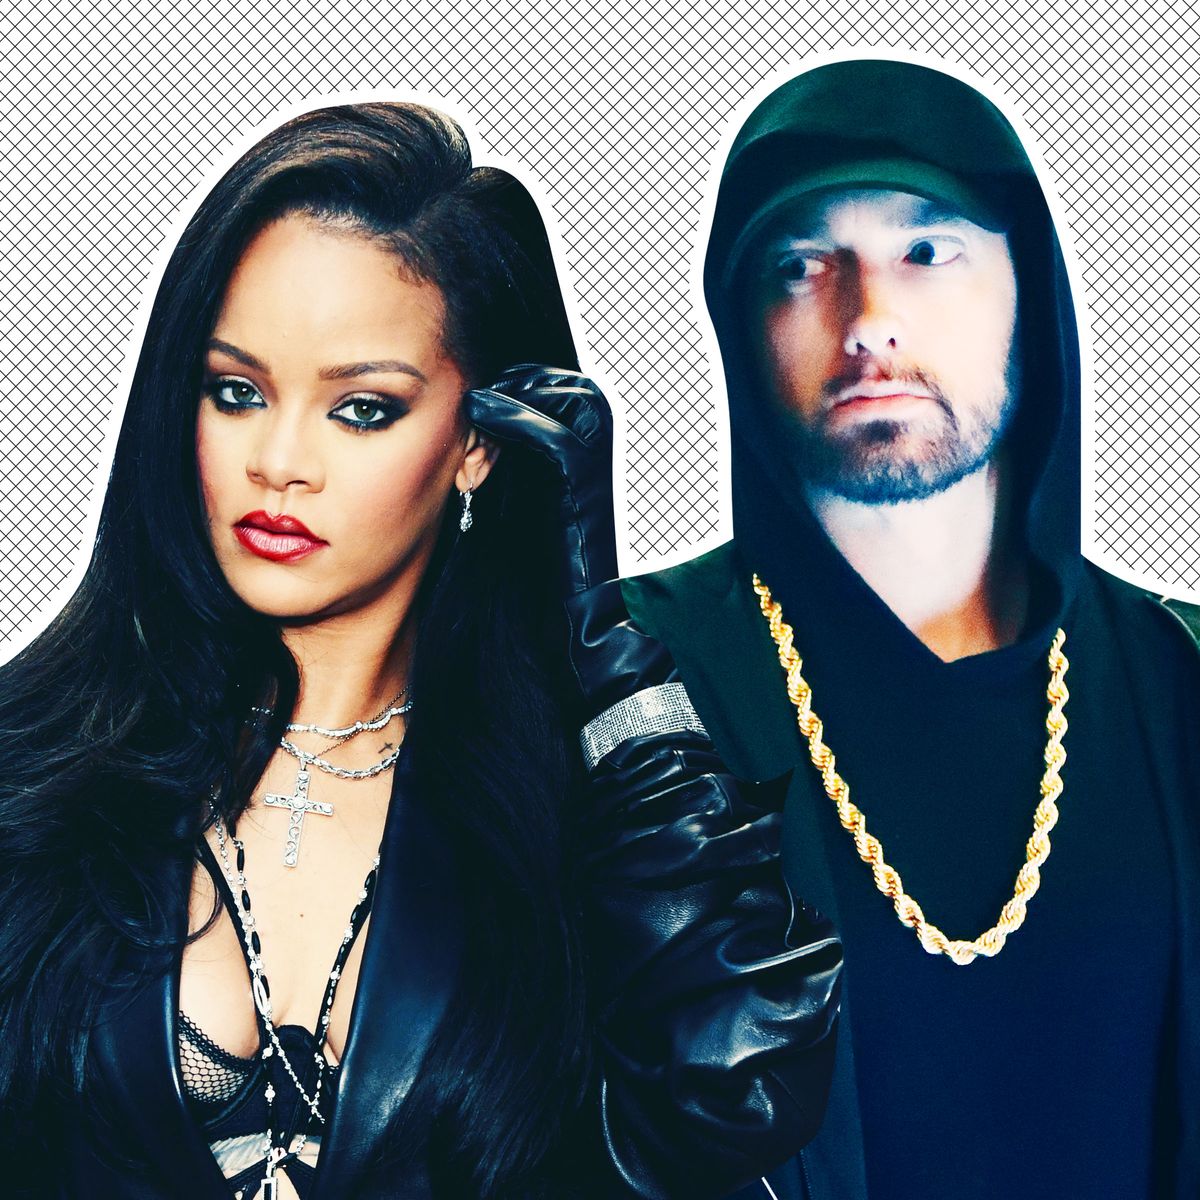 Eminem Finally Said Sorry to Rihanna